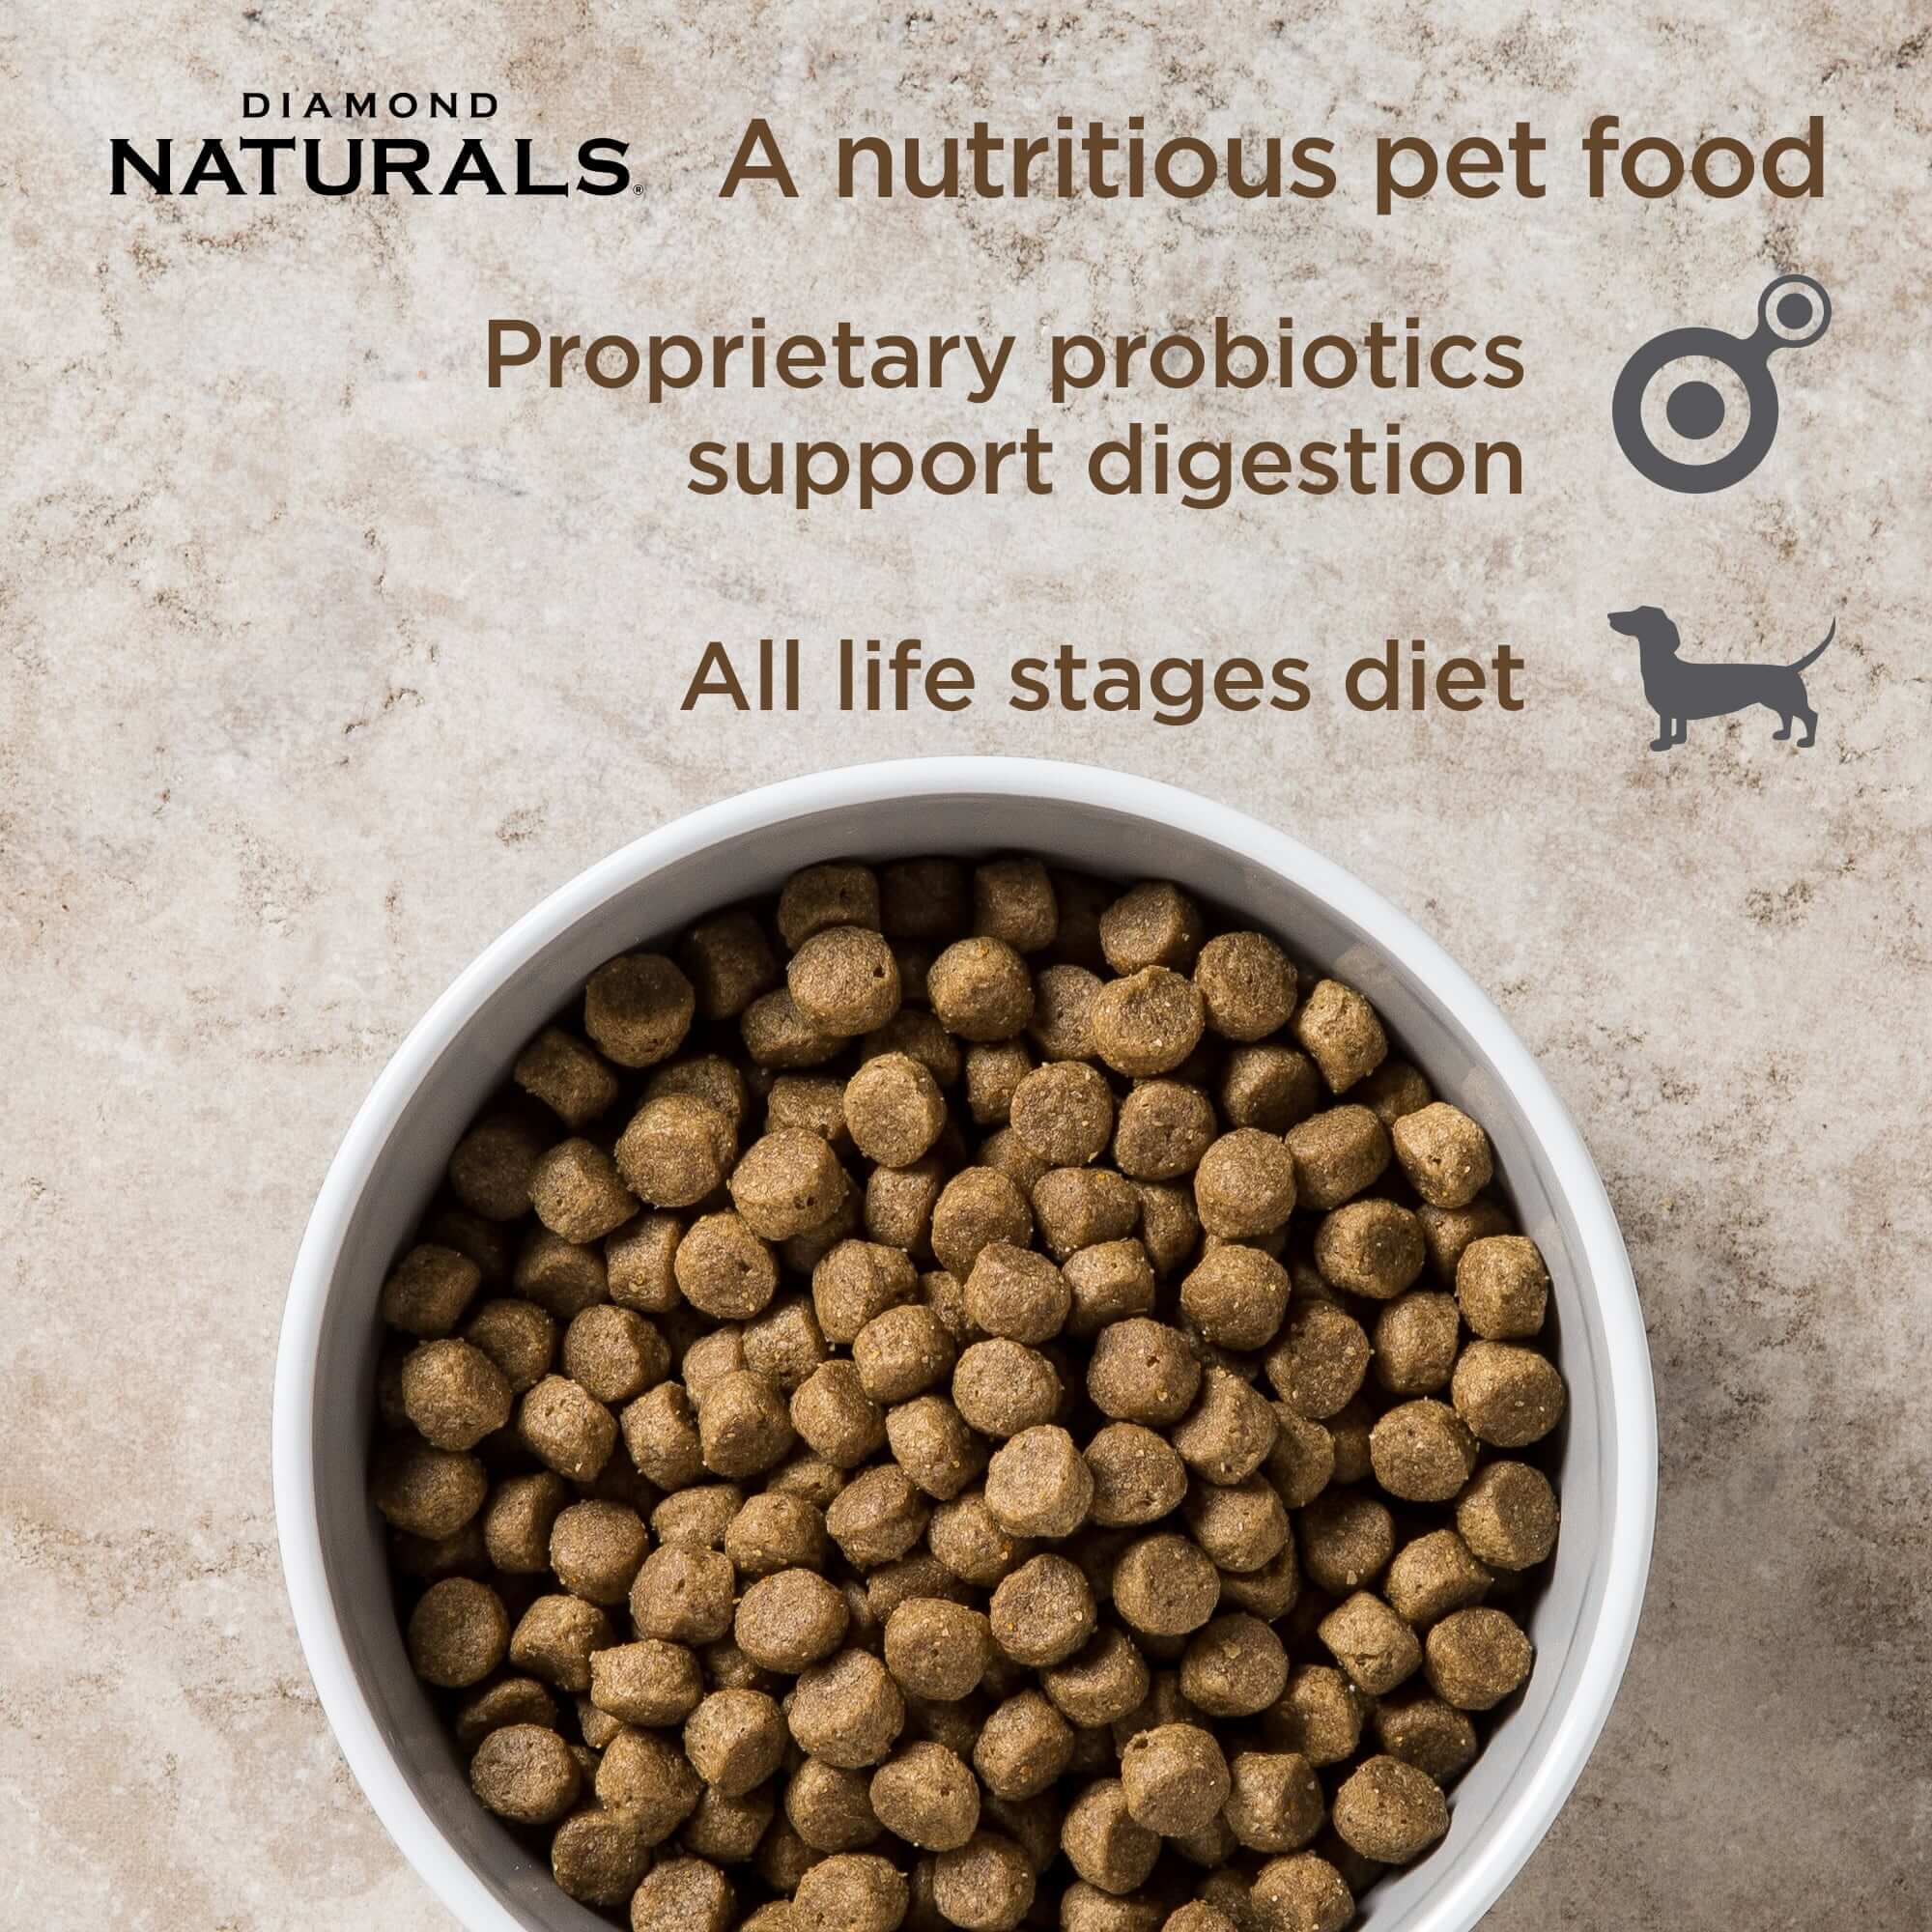 A nutritious pet food